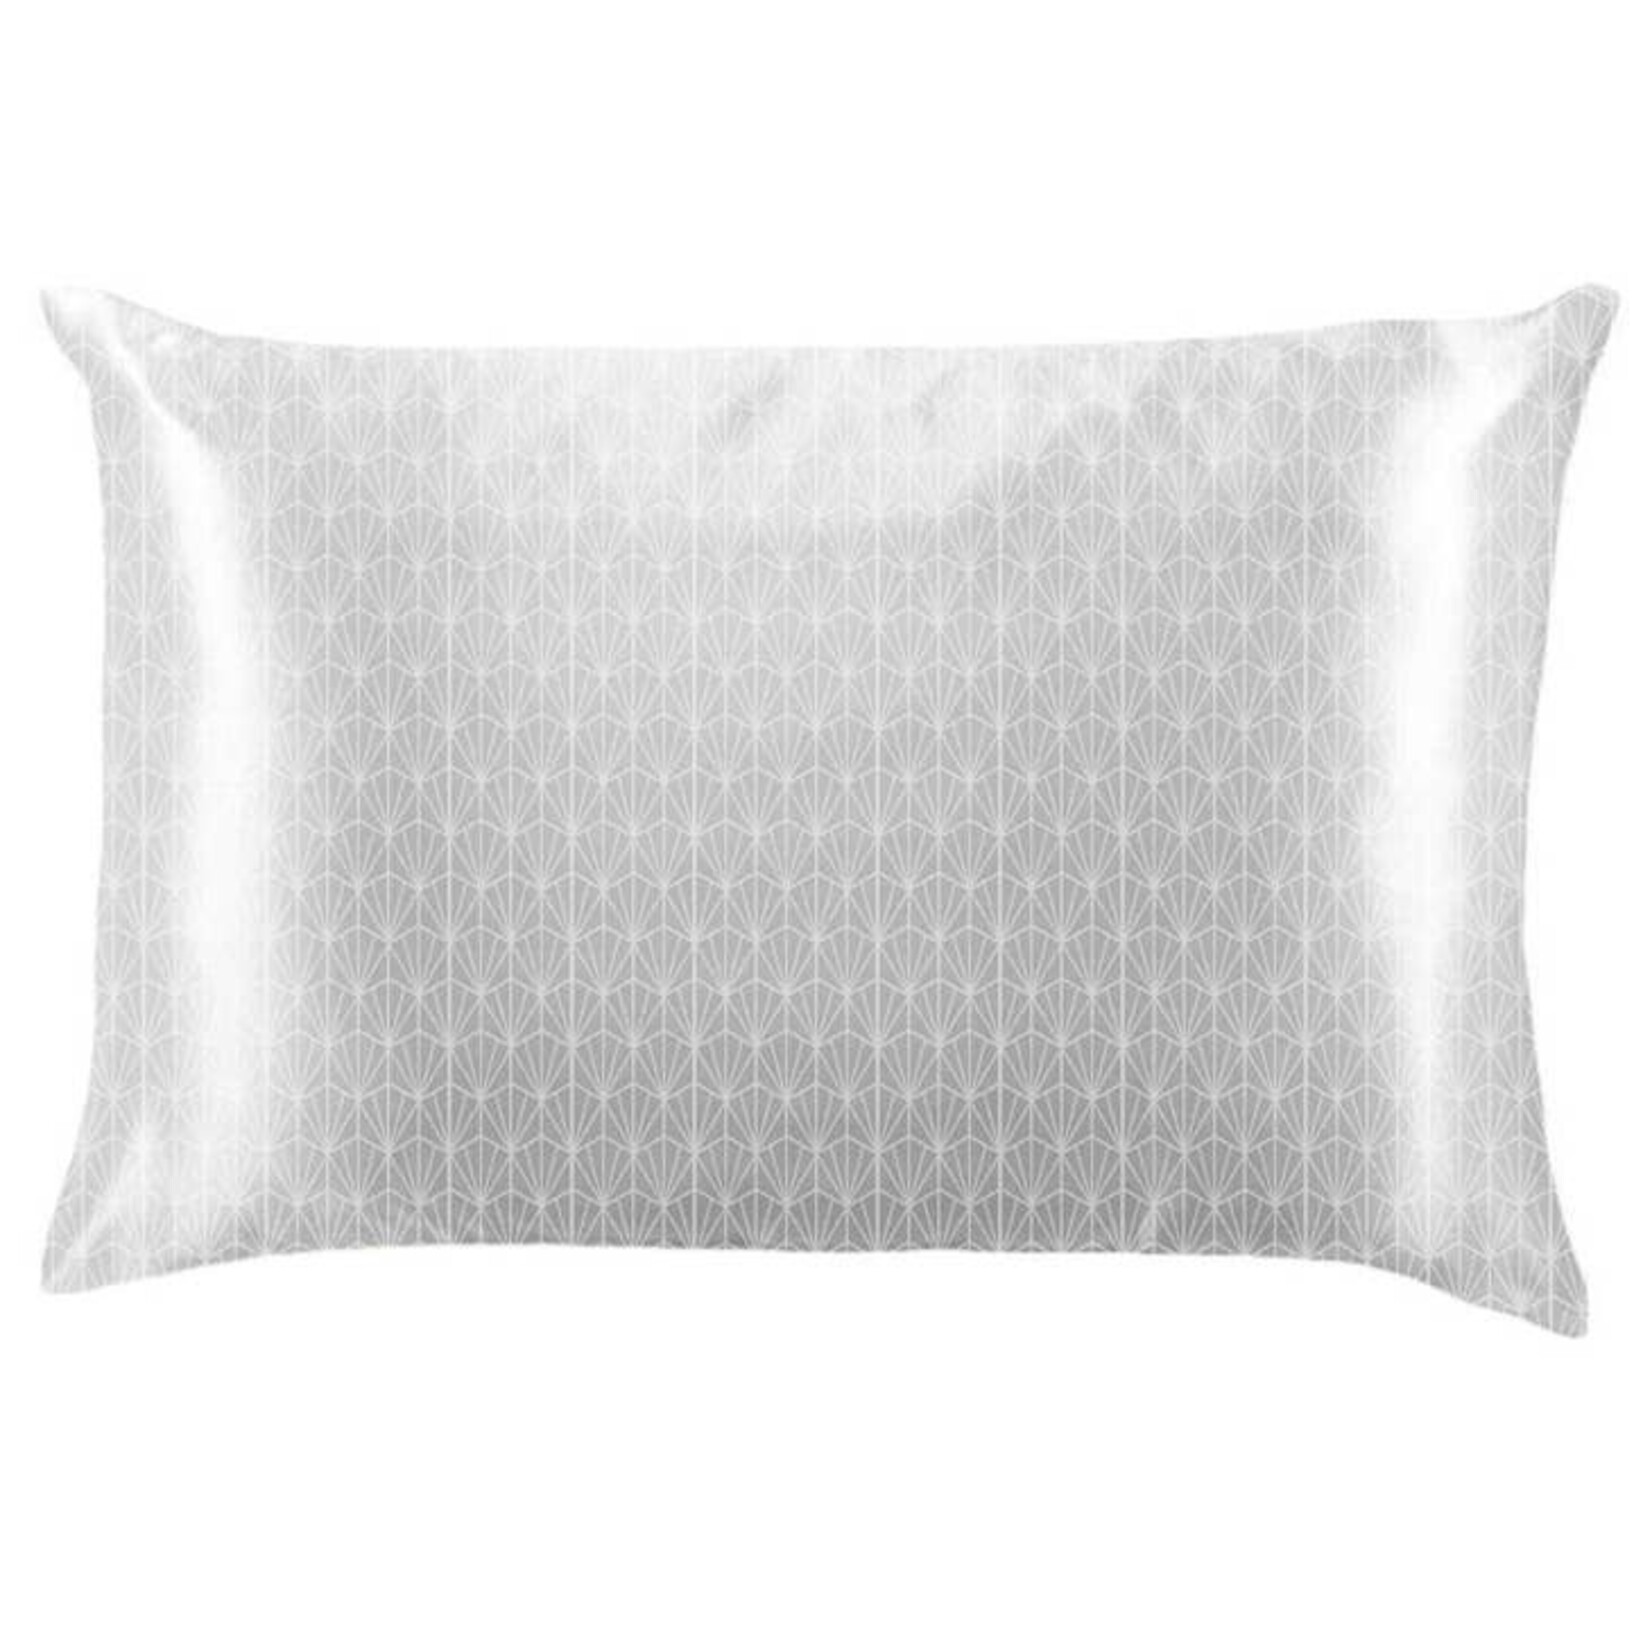 DMerch DM Merchandising Lemon Lavender Printed Silky Satin Pillowcase